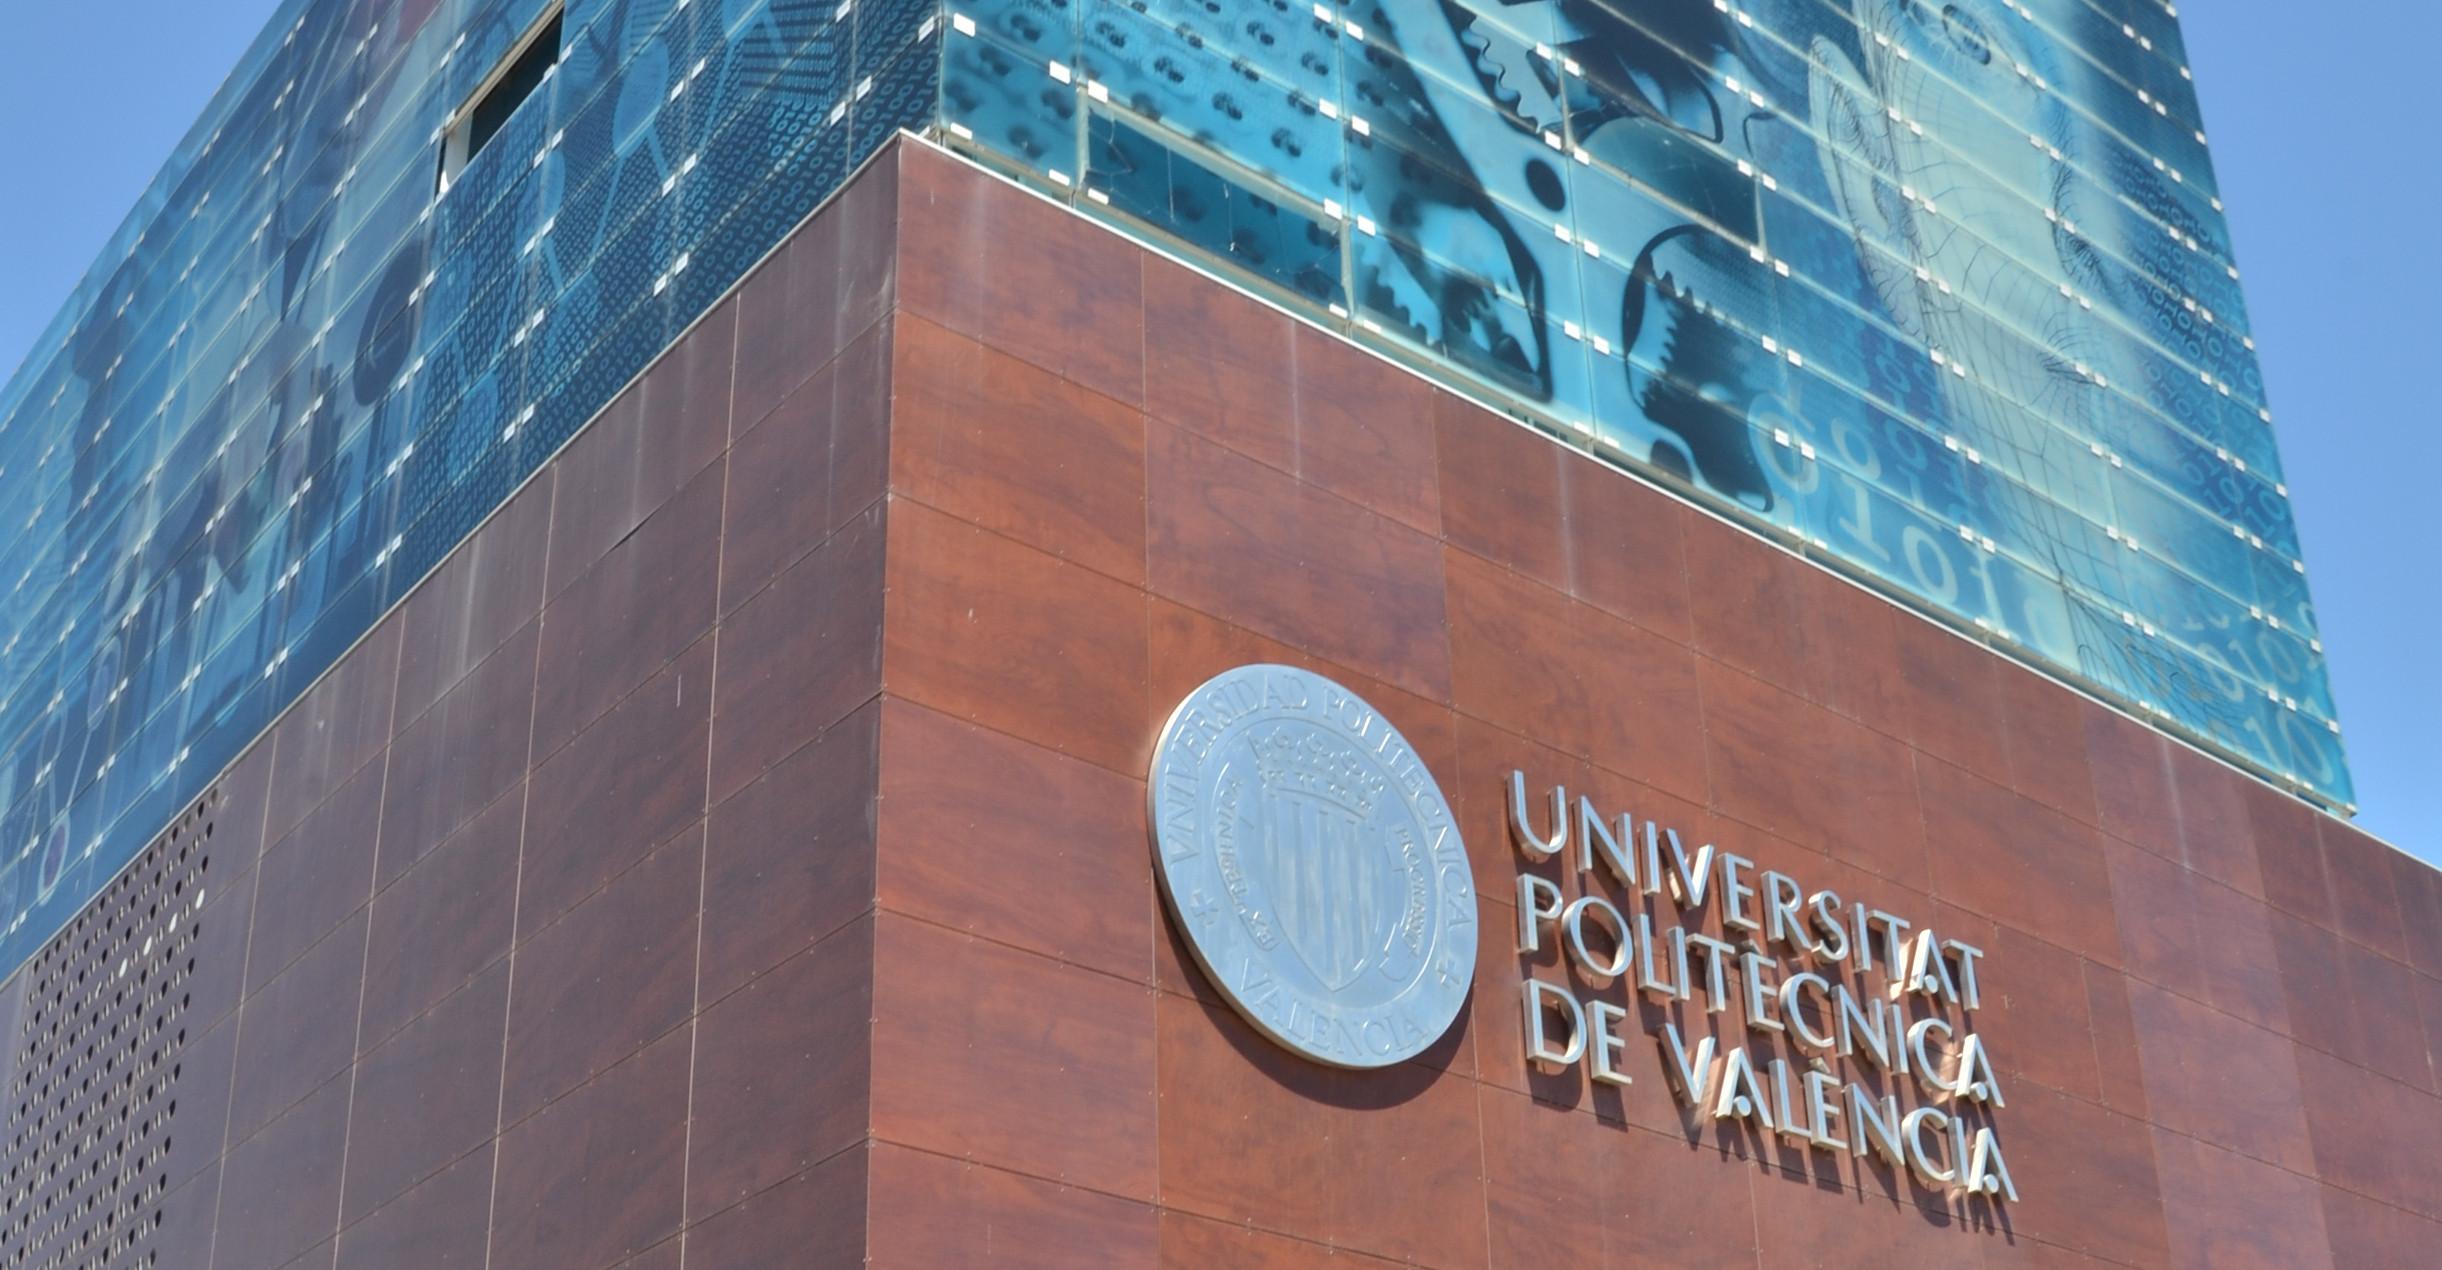 La Universitat Politècnica de València se une a RENIC